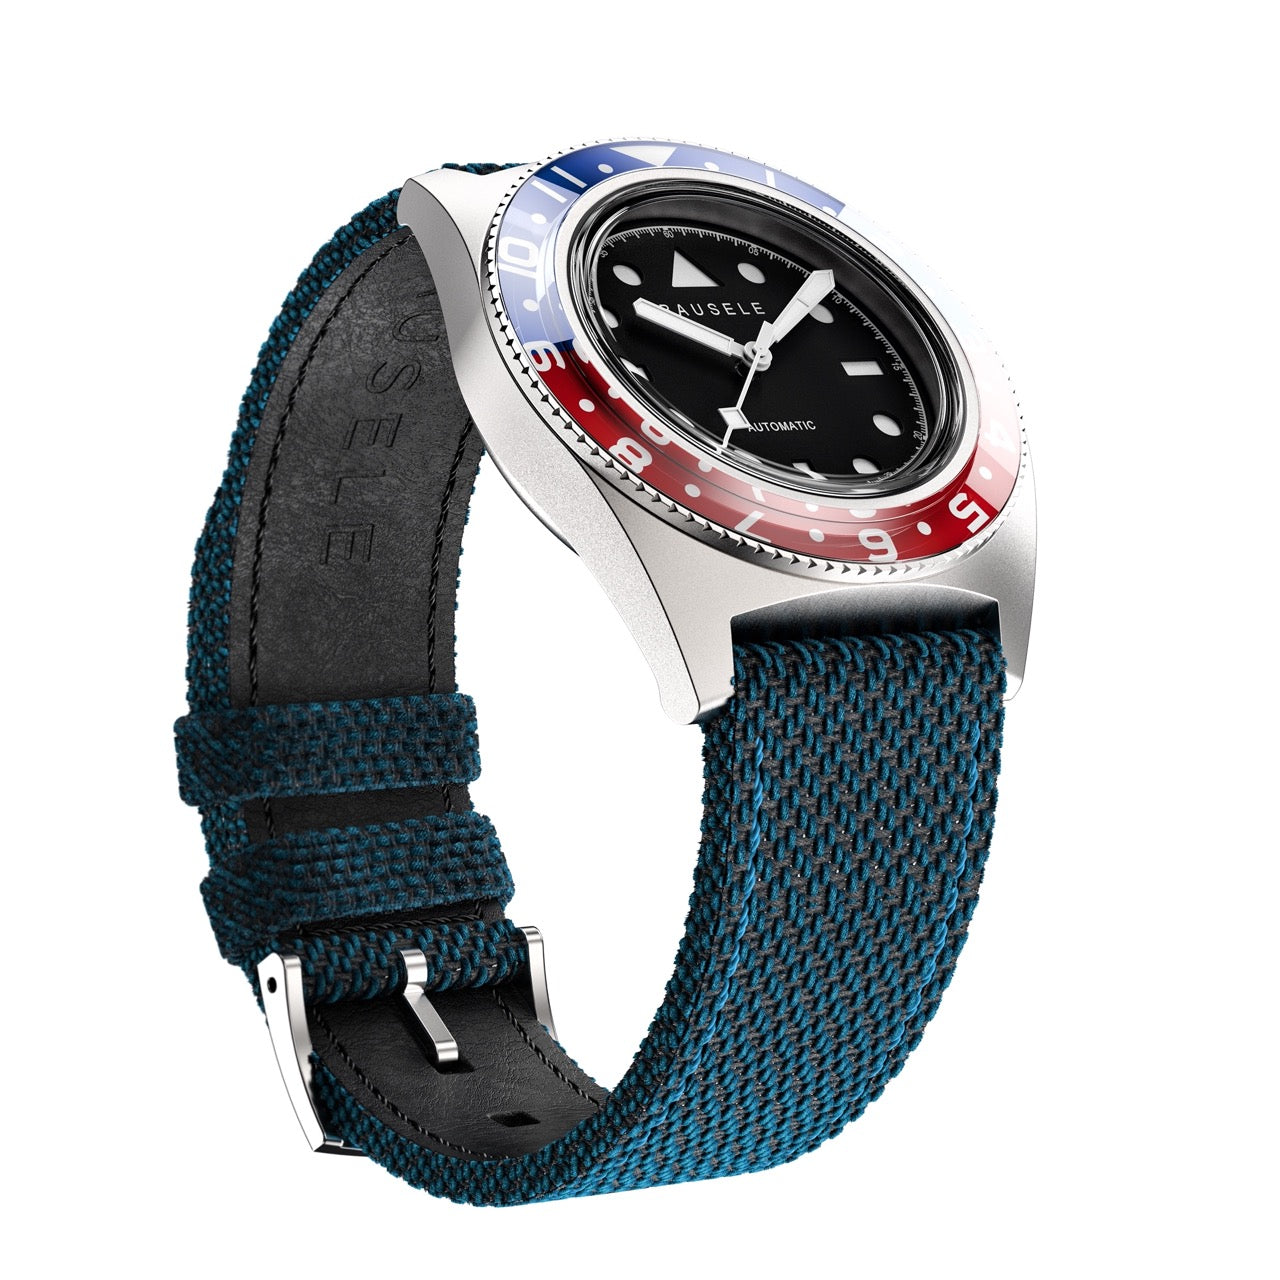 GMT Diver |  Liqui Moly | Limited Edition x 100